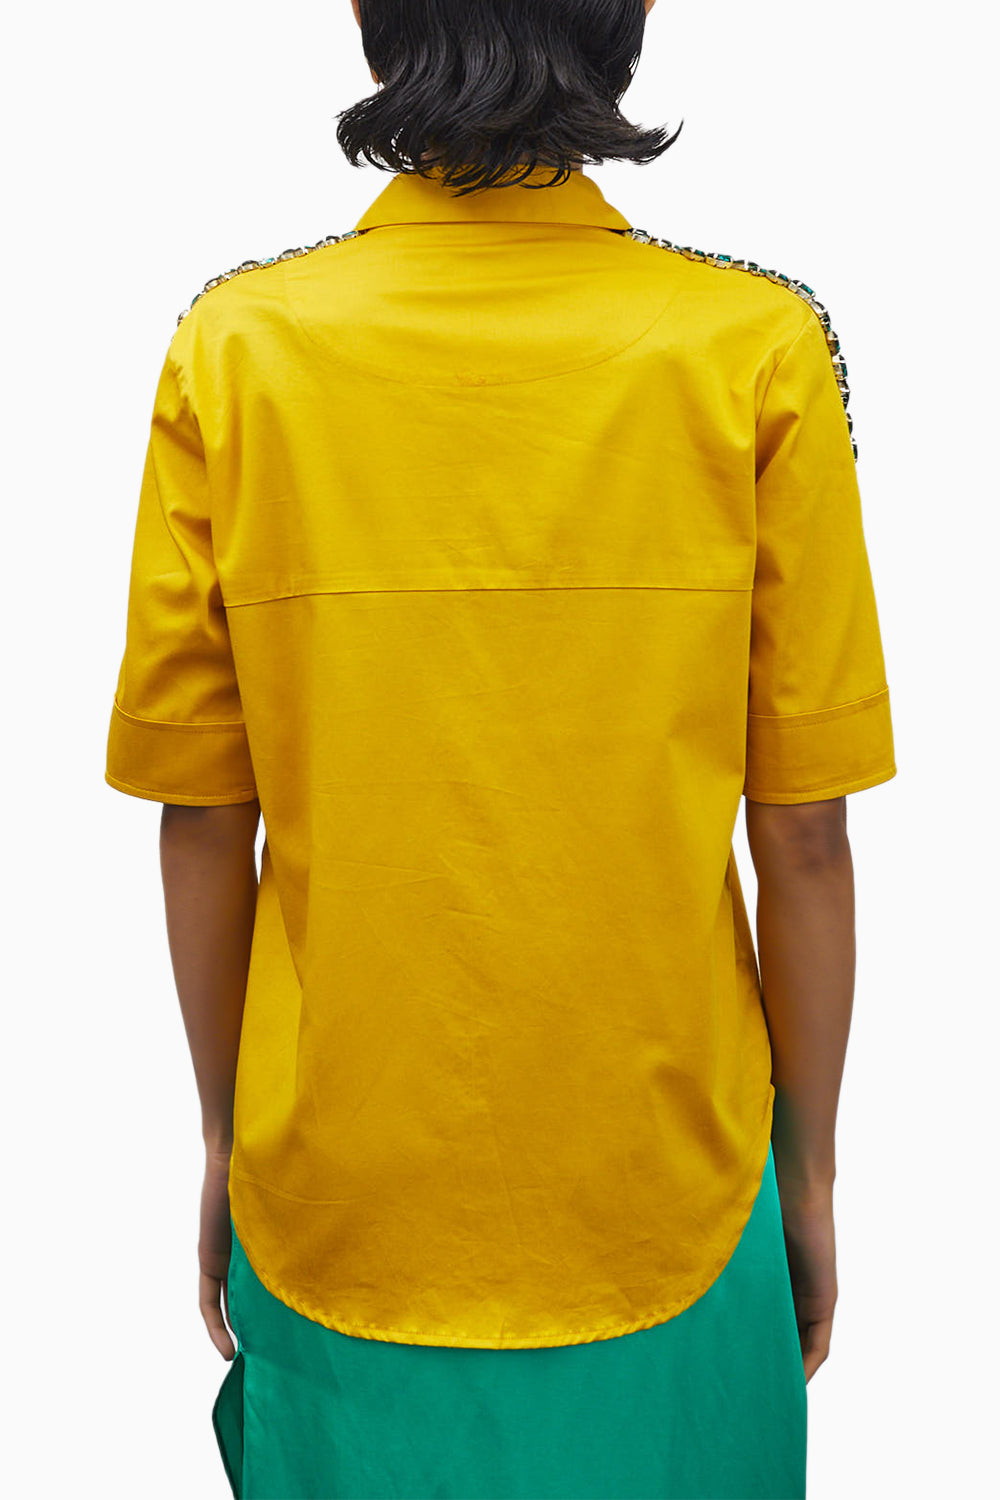 Canary Yellow Emerald Swarovski Ribbon Shirt